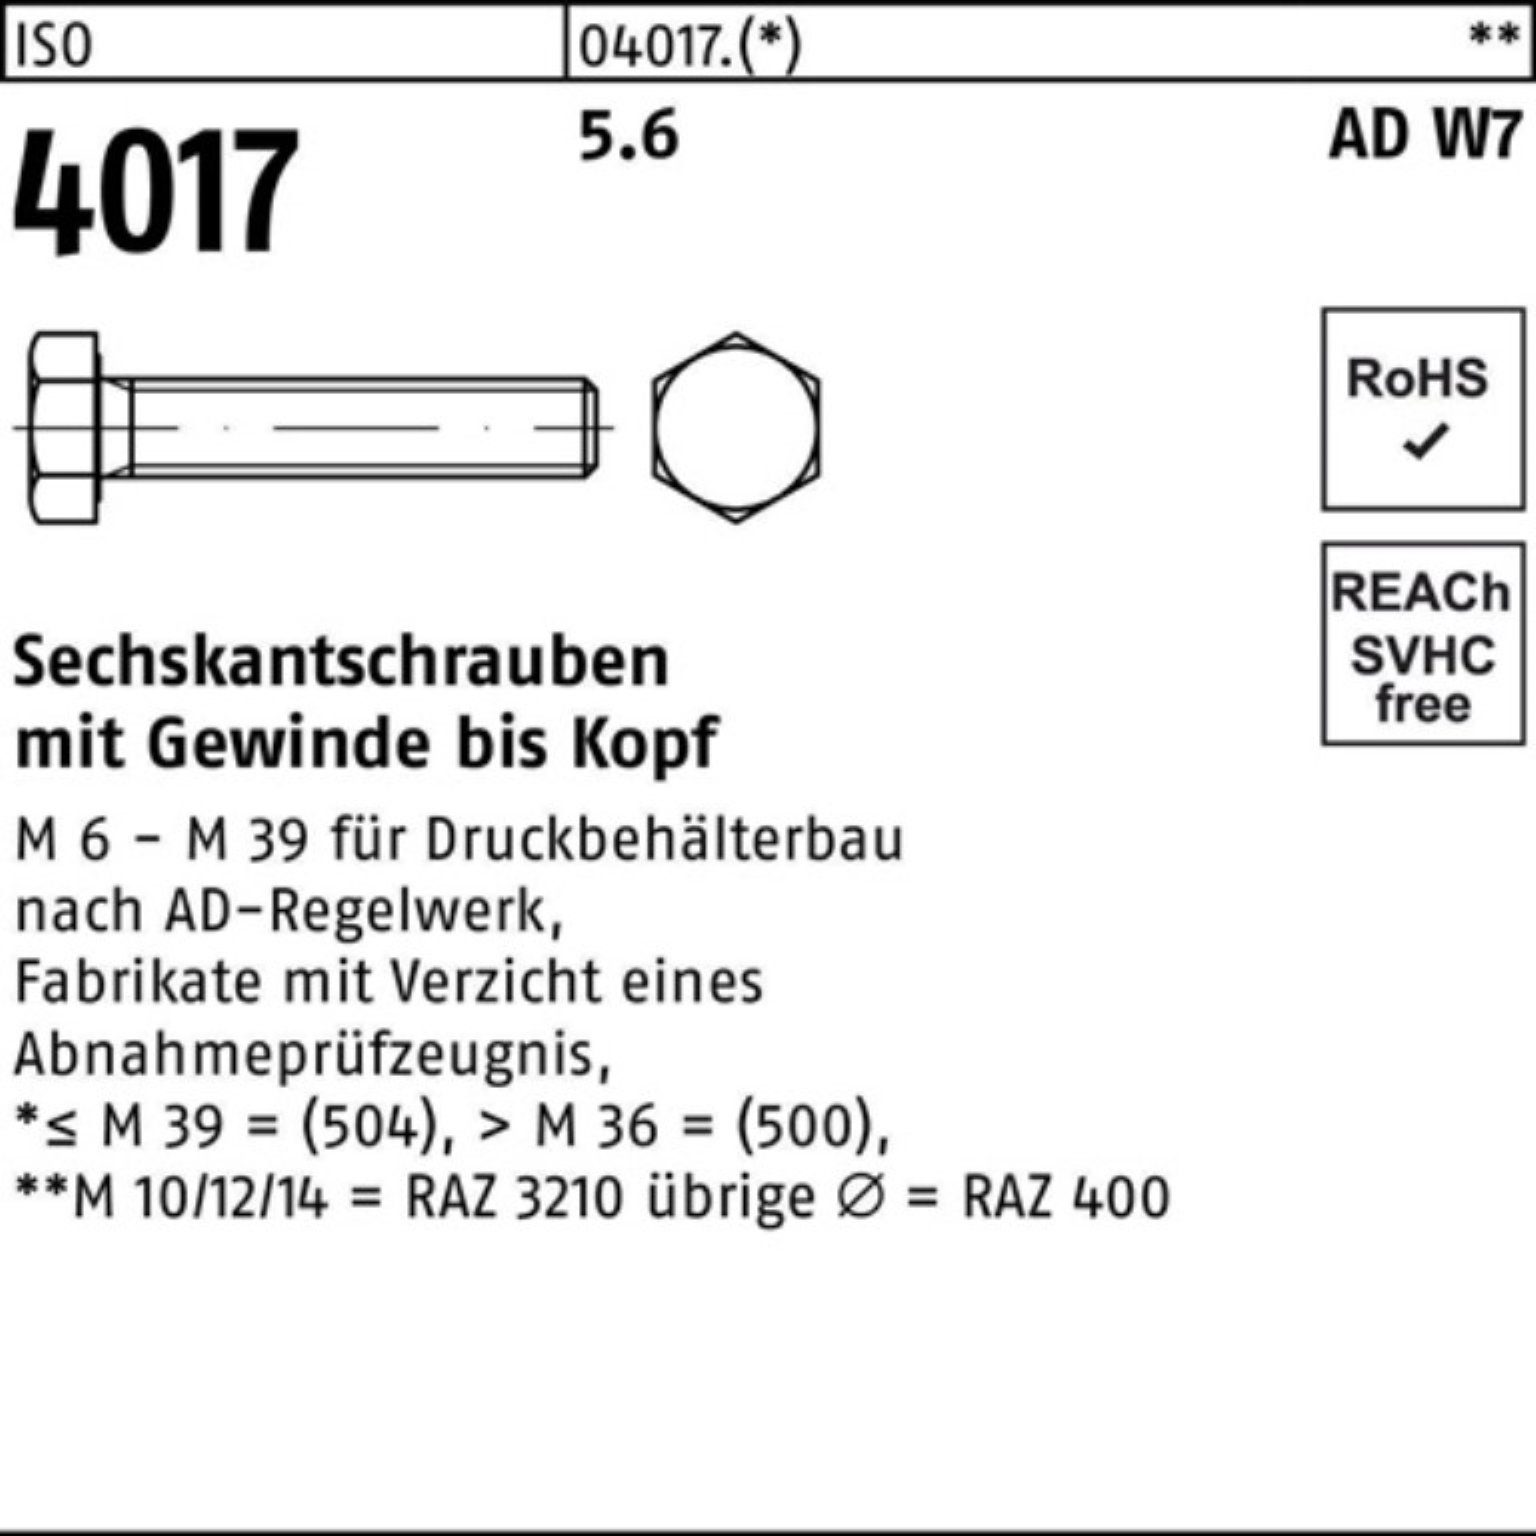 500er Sechskantschraube 5.6 Bufab 25 ISO Pack 4017 VG AD Sechskantschraube Stück M6x W7 500 I